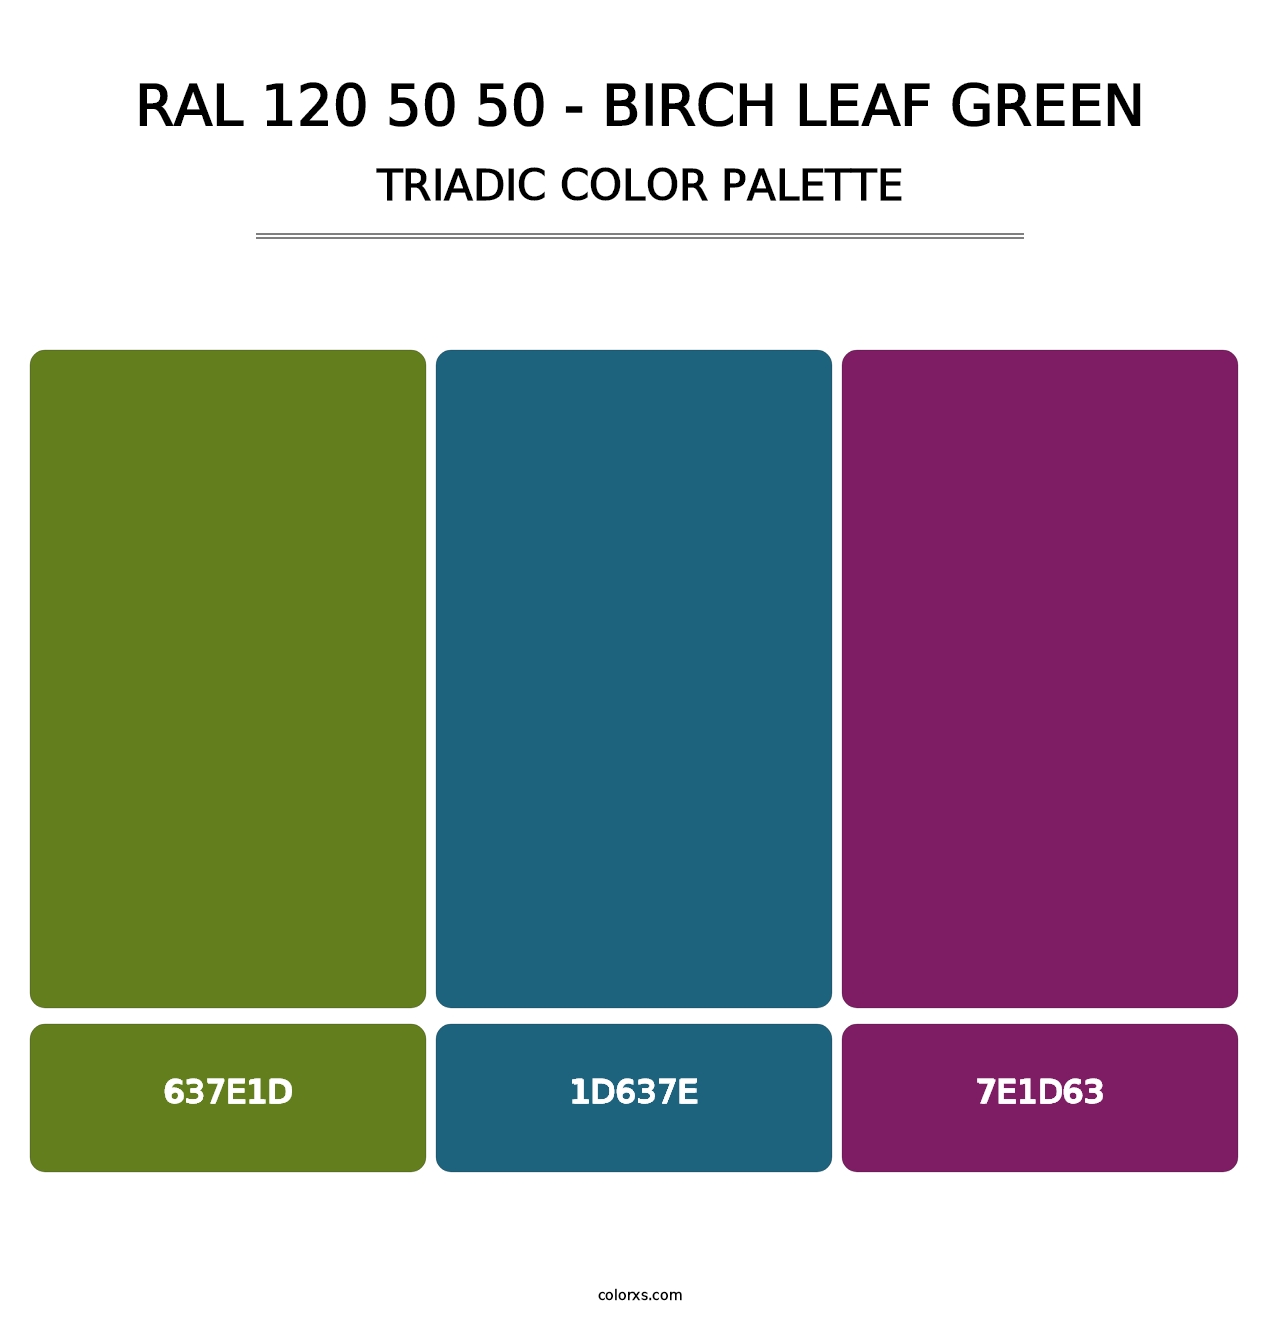 RAL 120 50 50 - Birch Leaf Green - Triadic Color Palette